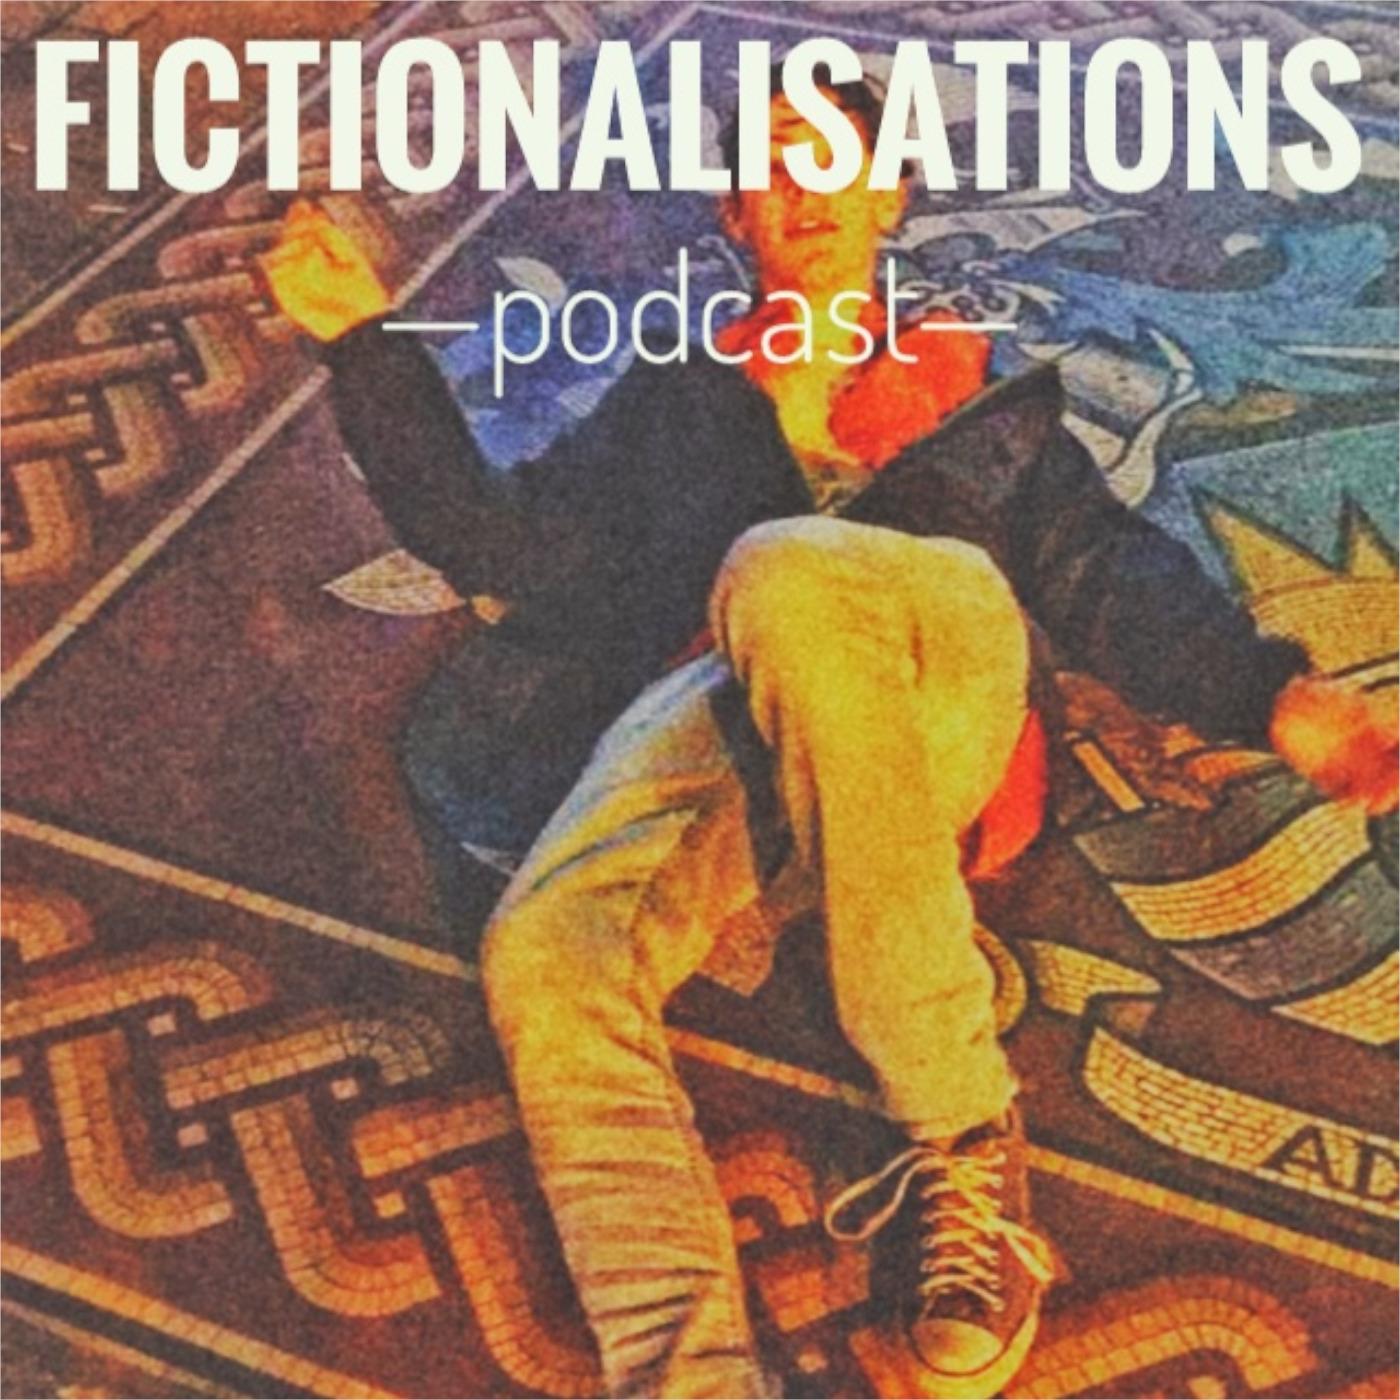 Fictionalisations podcast